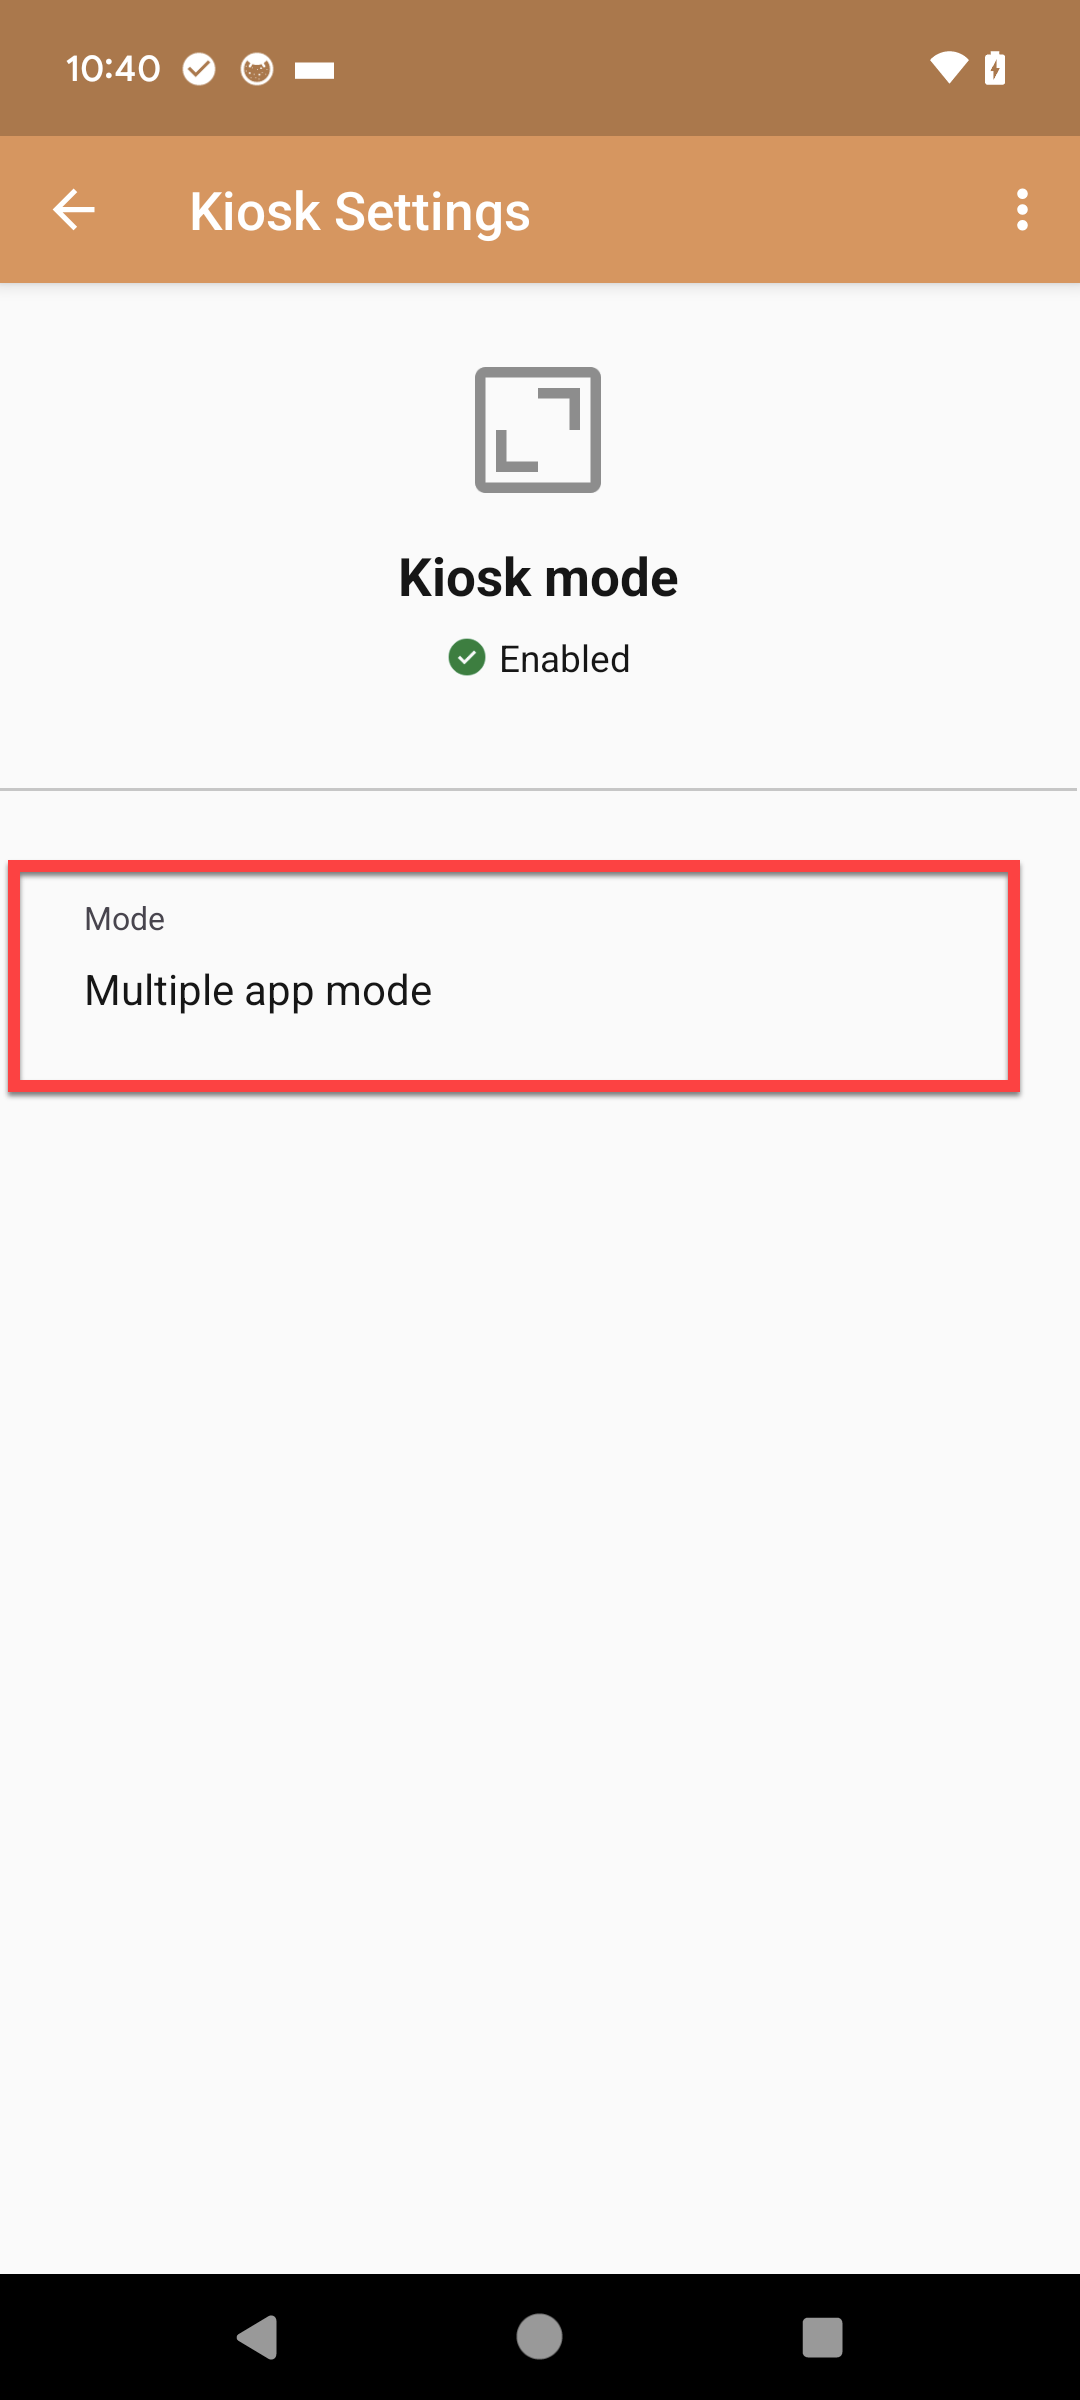 COSU mode type is multiple app mode